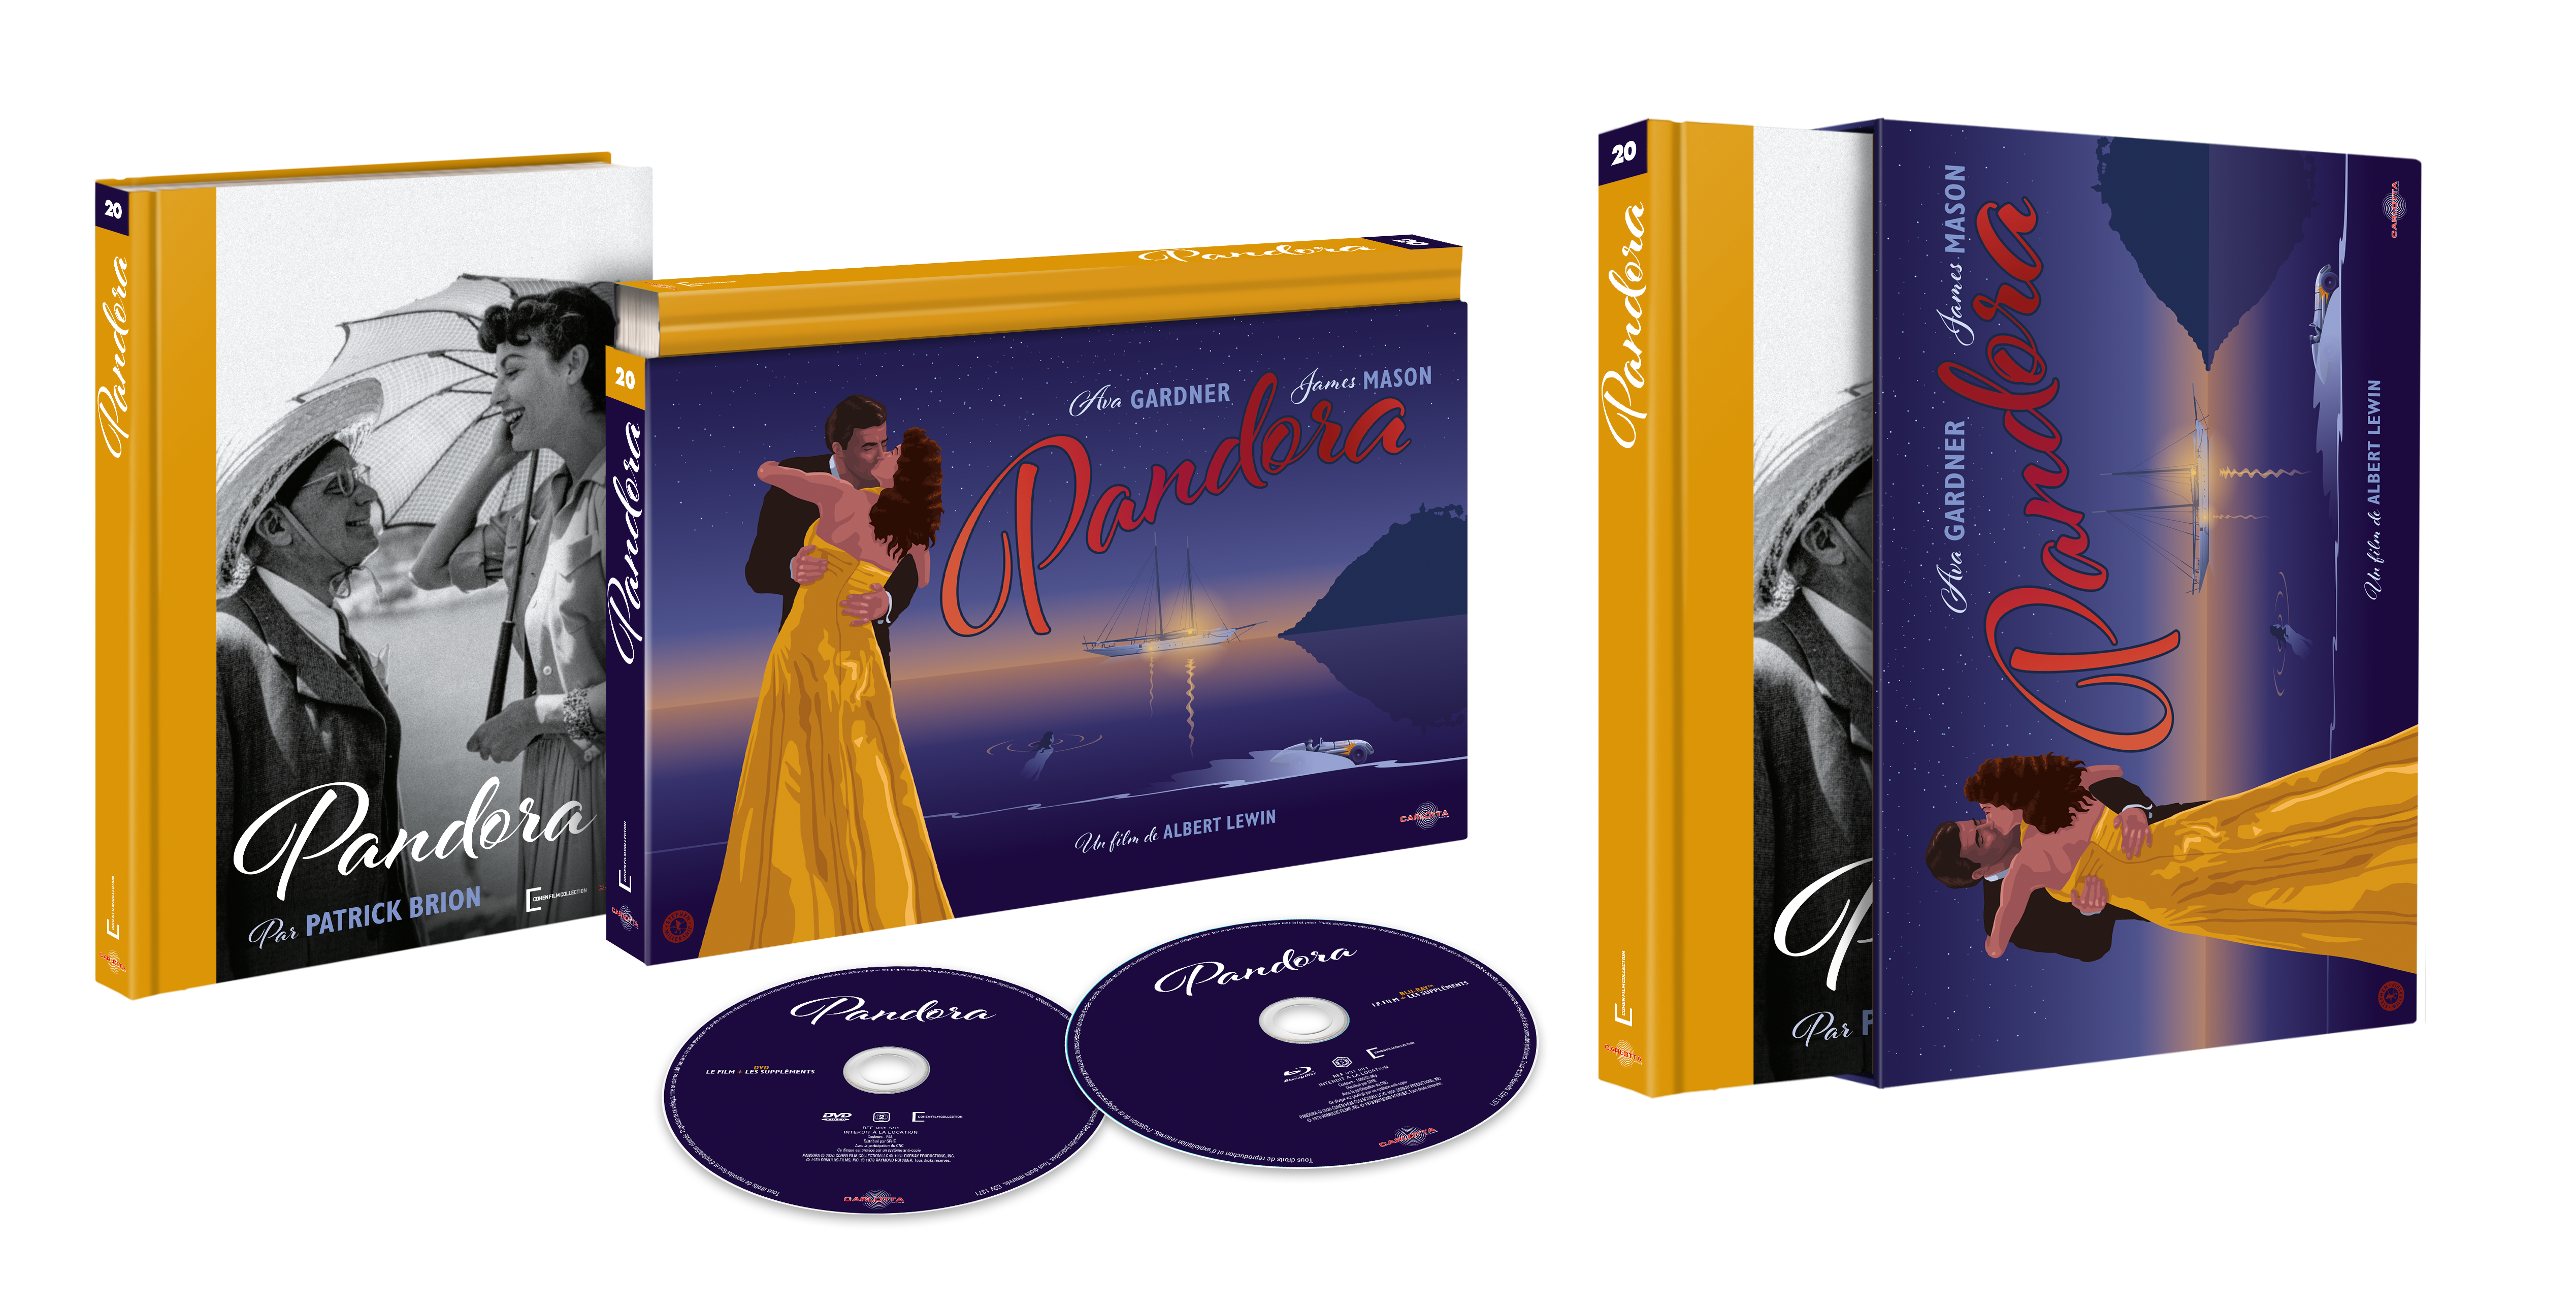 Pandora - Ultra Collector's Box 20 - Blu-ray + DVD + Book